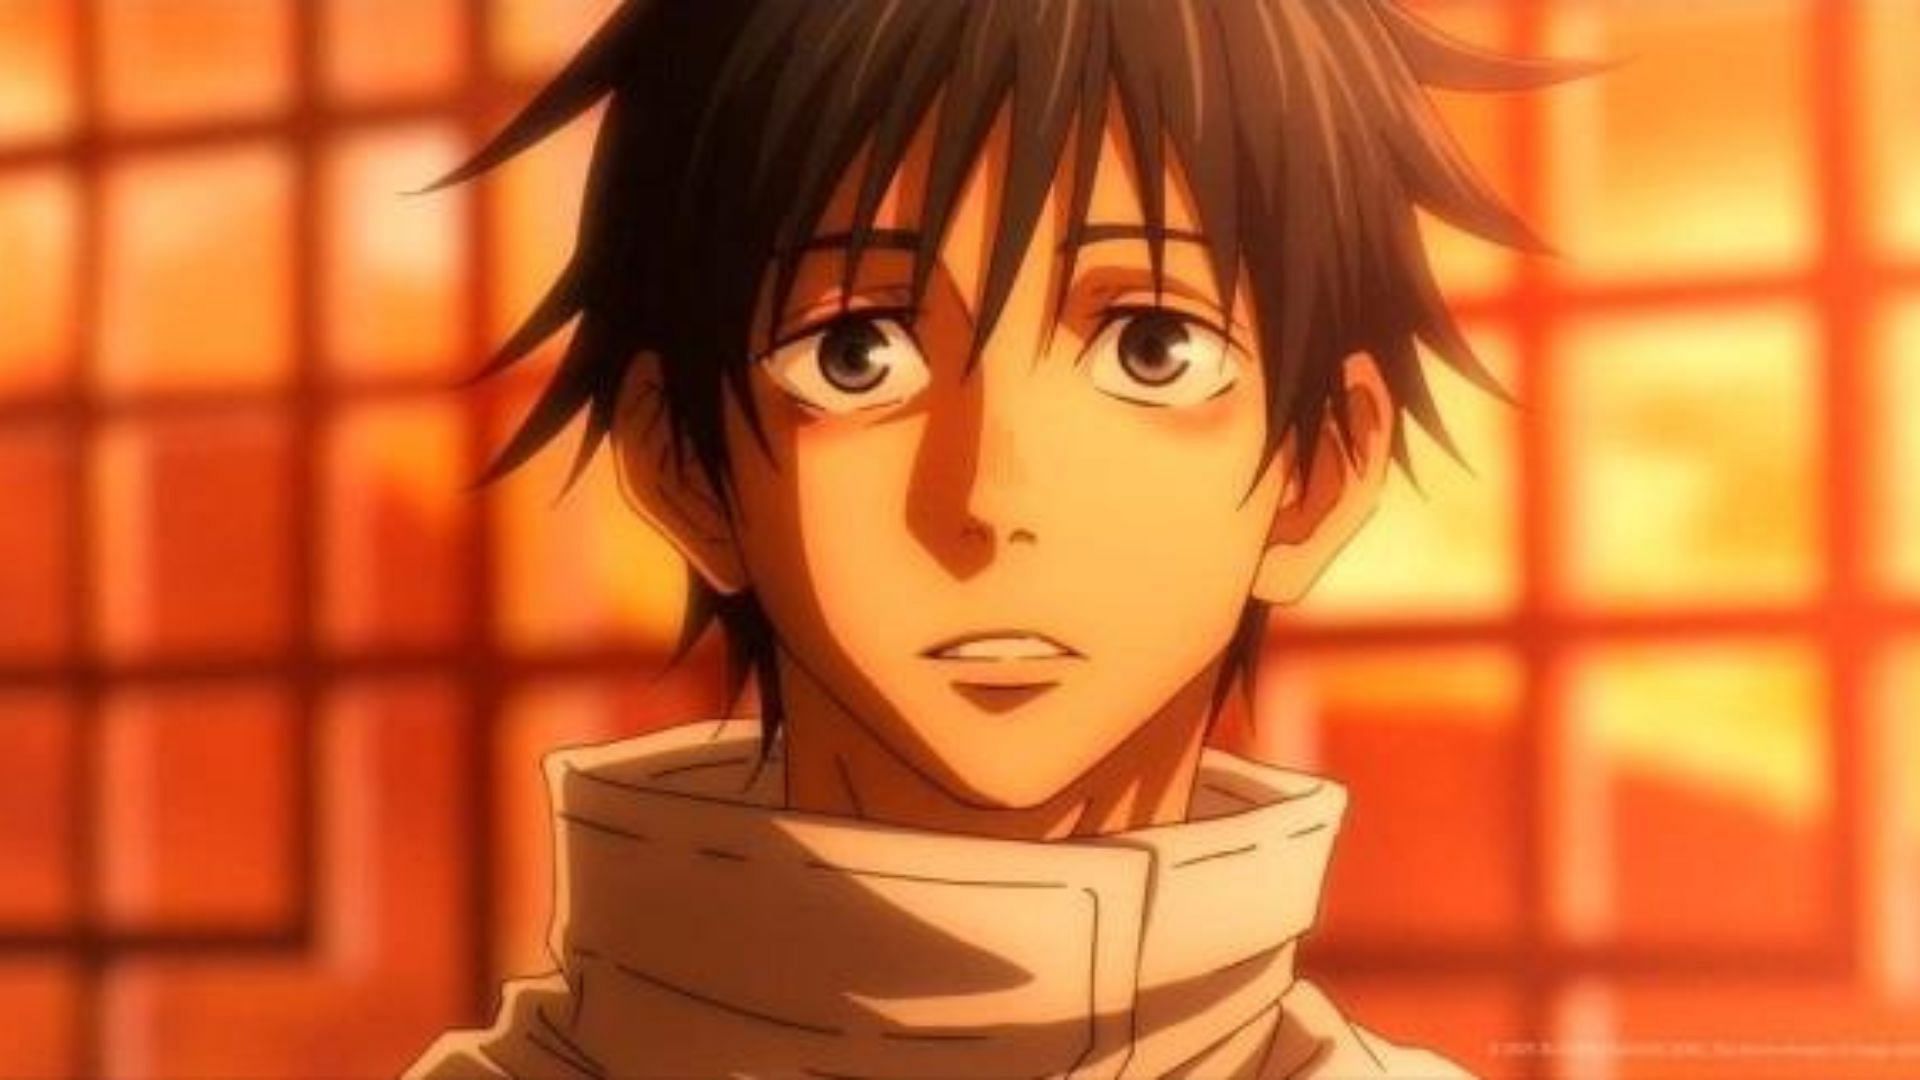 Yuta Okkotsu as shown in anime (Image via Studio MAPPA)